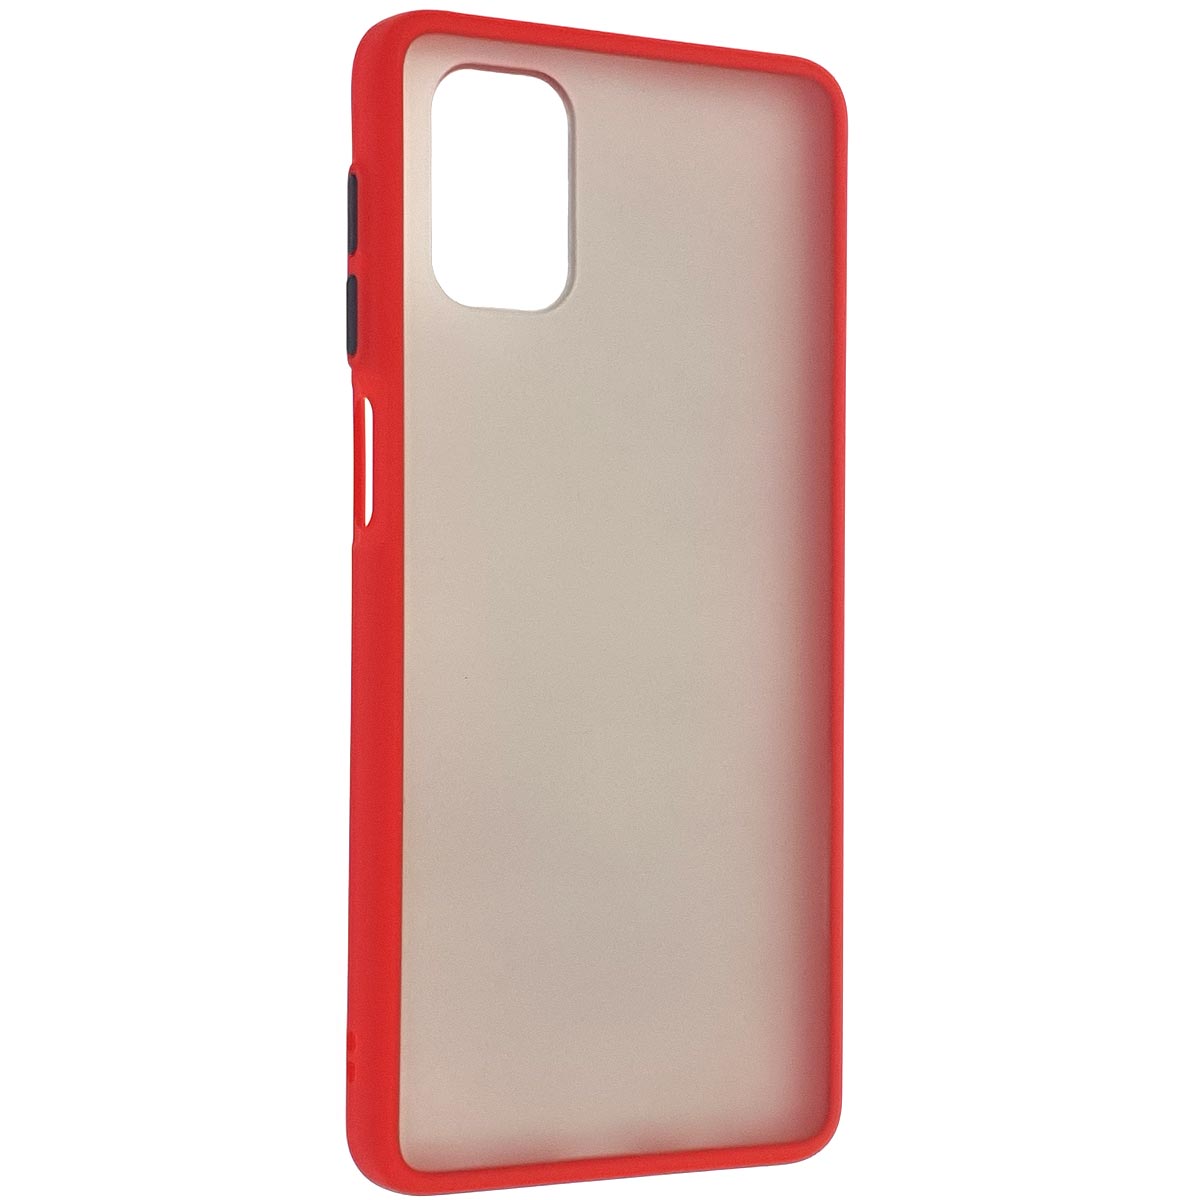 Чехол накладка SKIN SHELL для SAMSUNG Galaxy M51 (SM-515), силикон, пластик, цвет окантовки красный